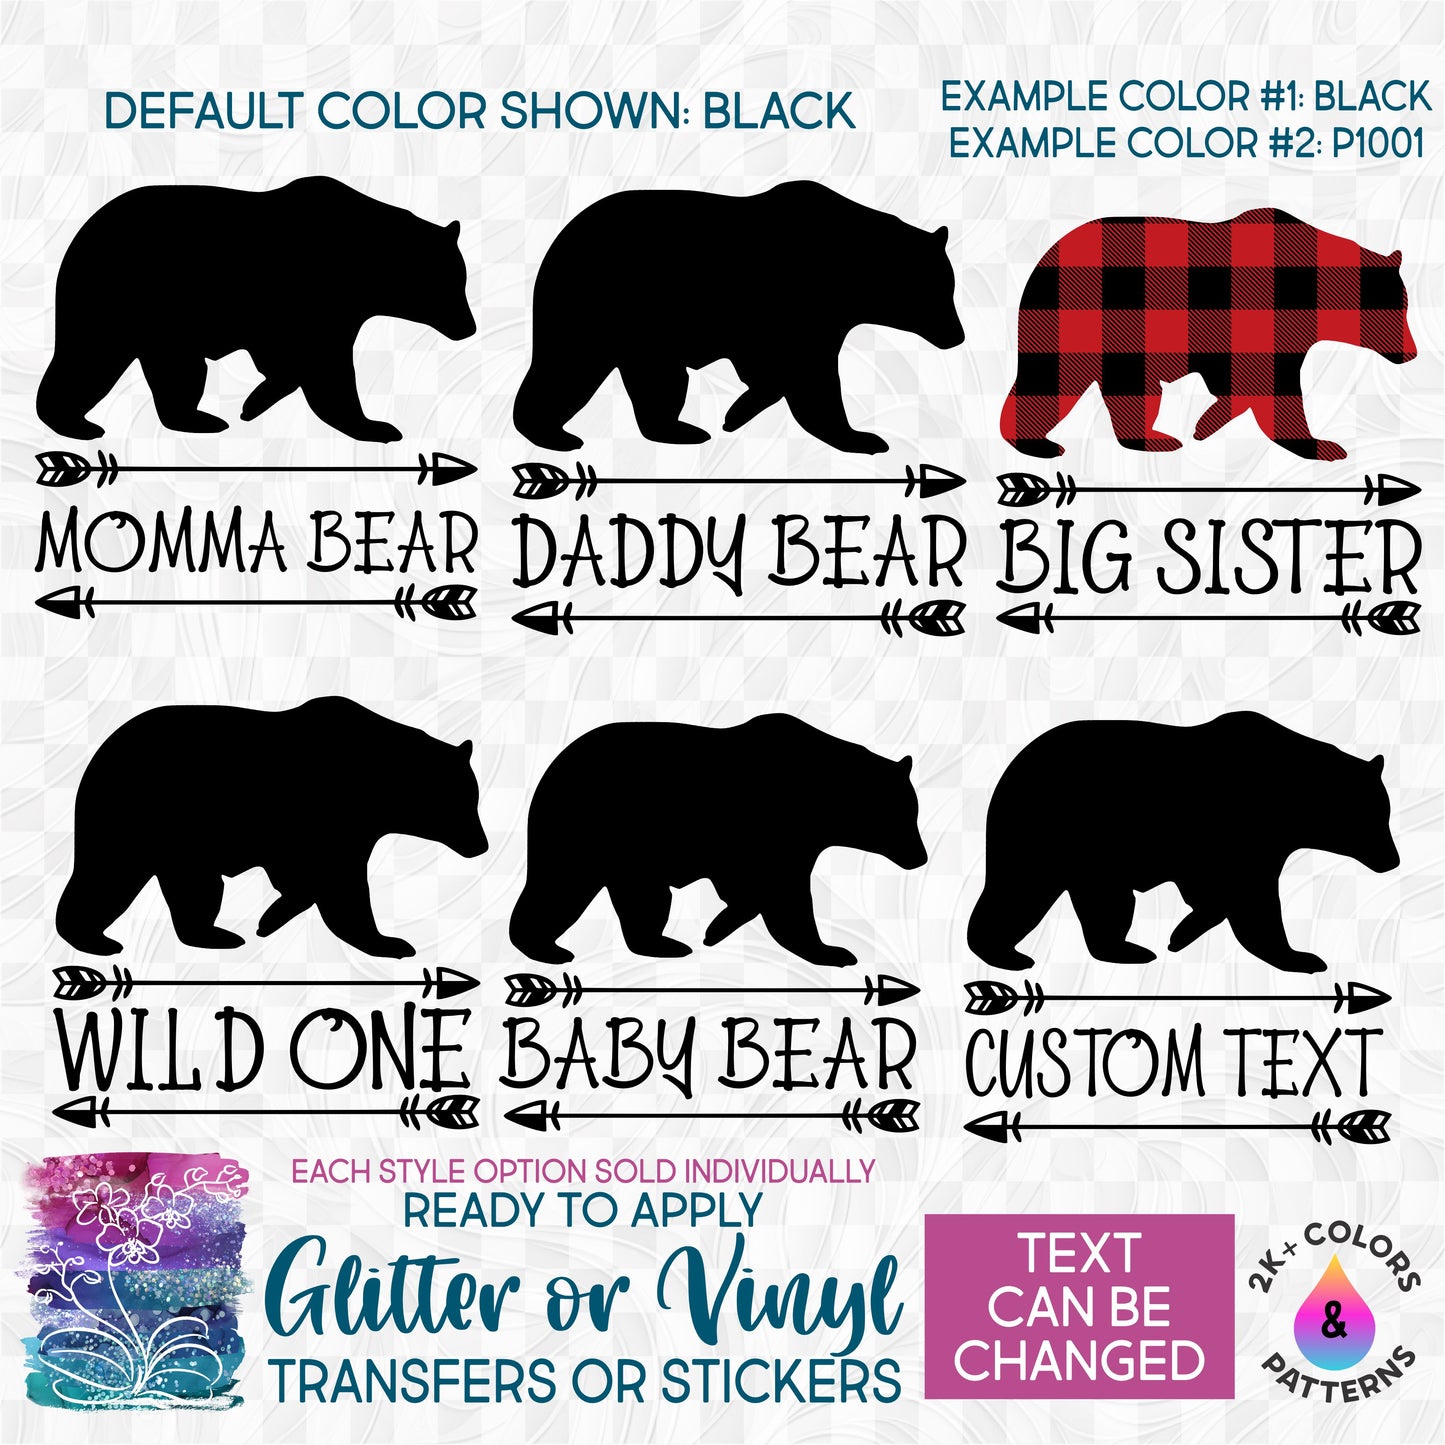 (s232-U) Bear Family Custom Text Glitter or Vinyl Iron-On Transfer or Sticker